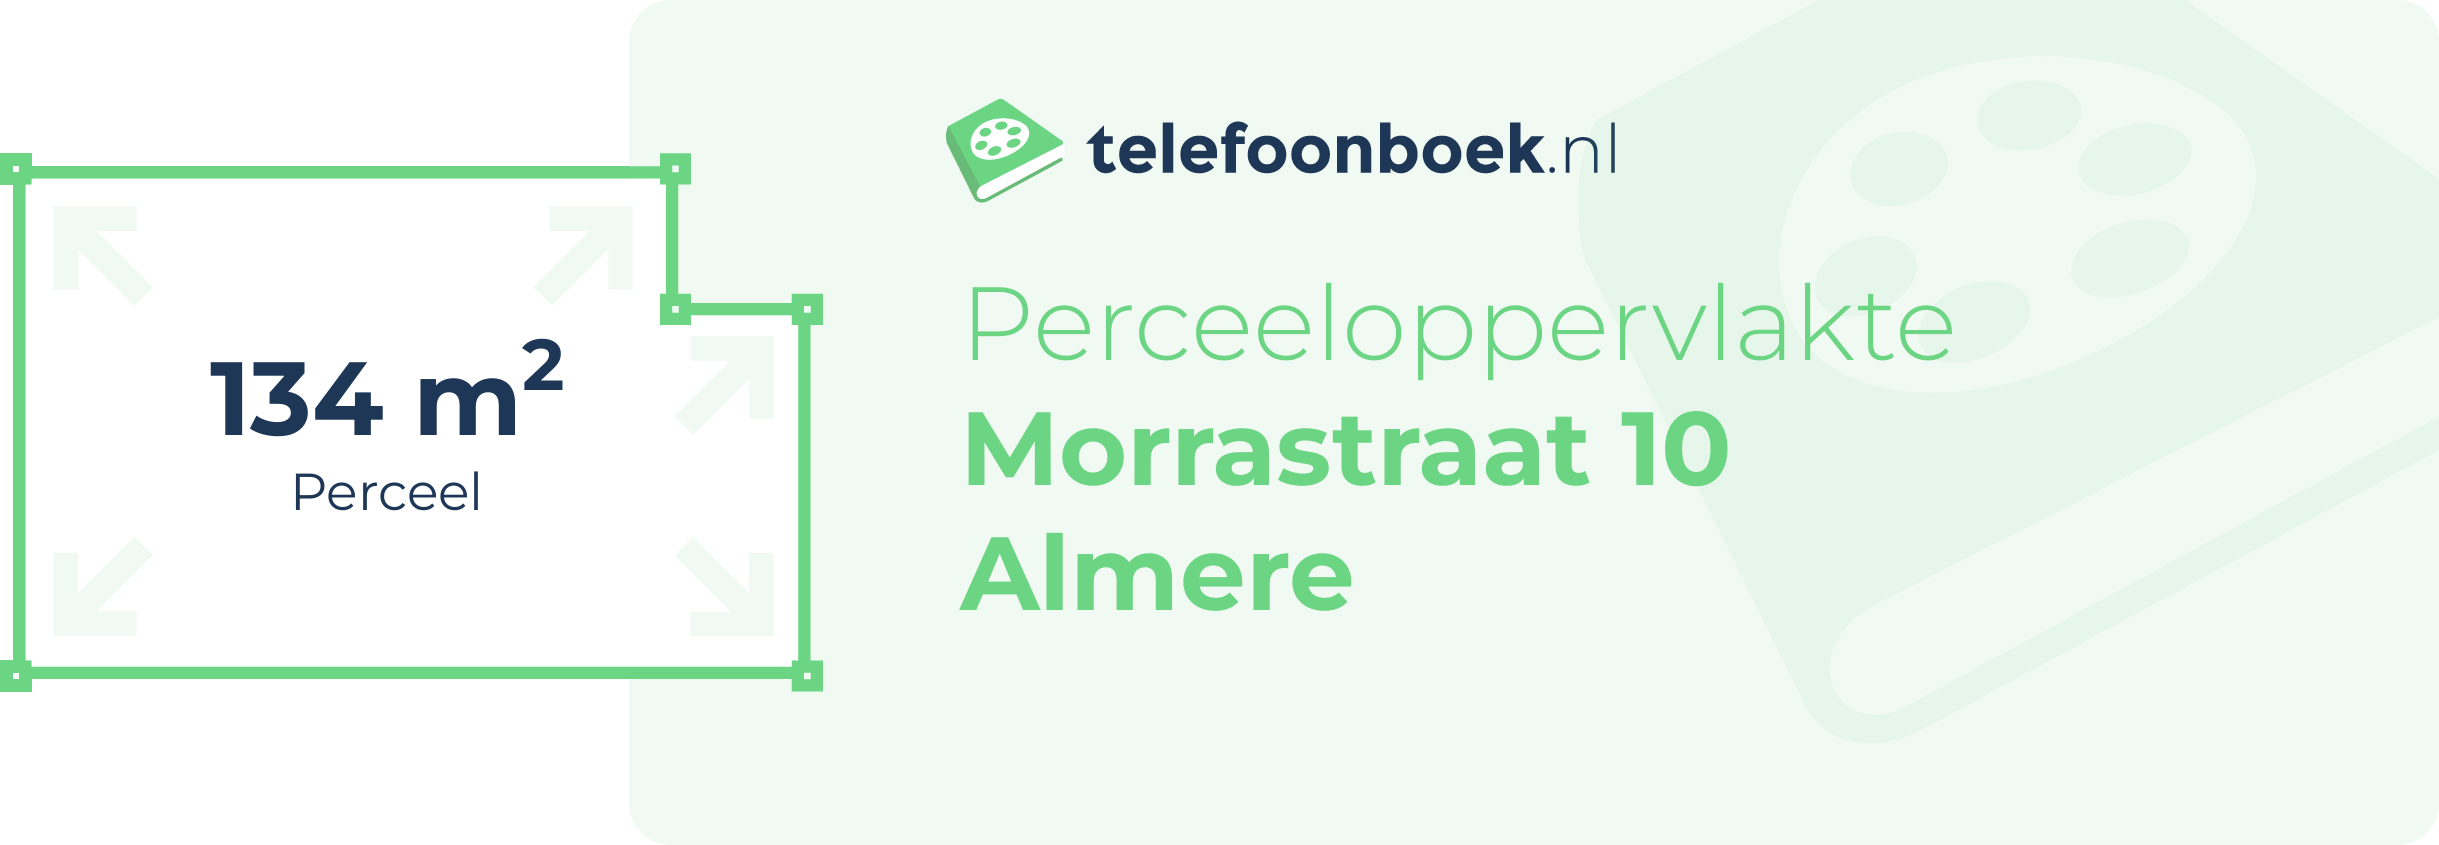 Perceeloppervlakte Morrastraat 10 Almere